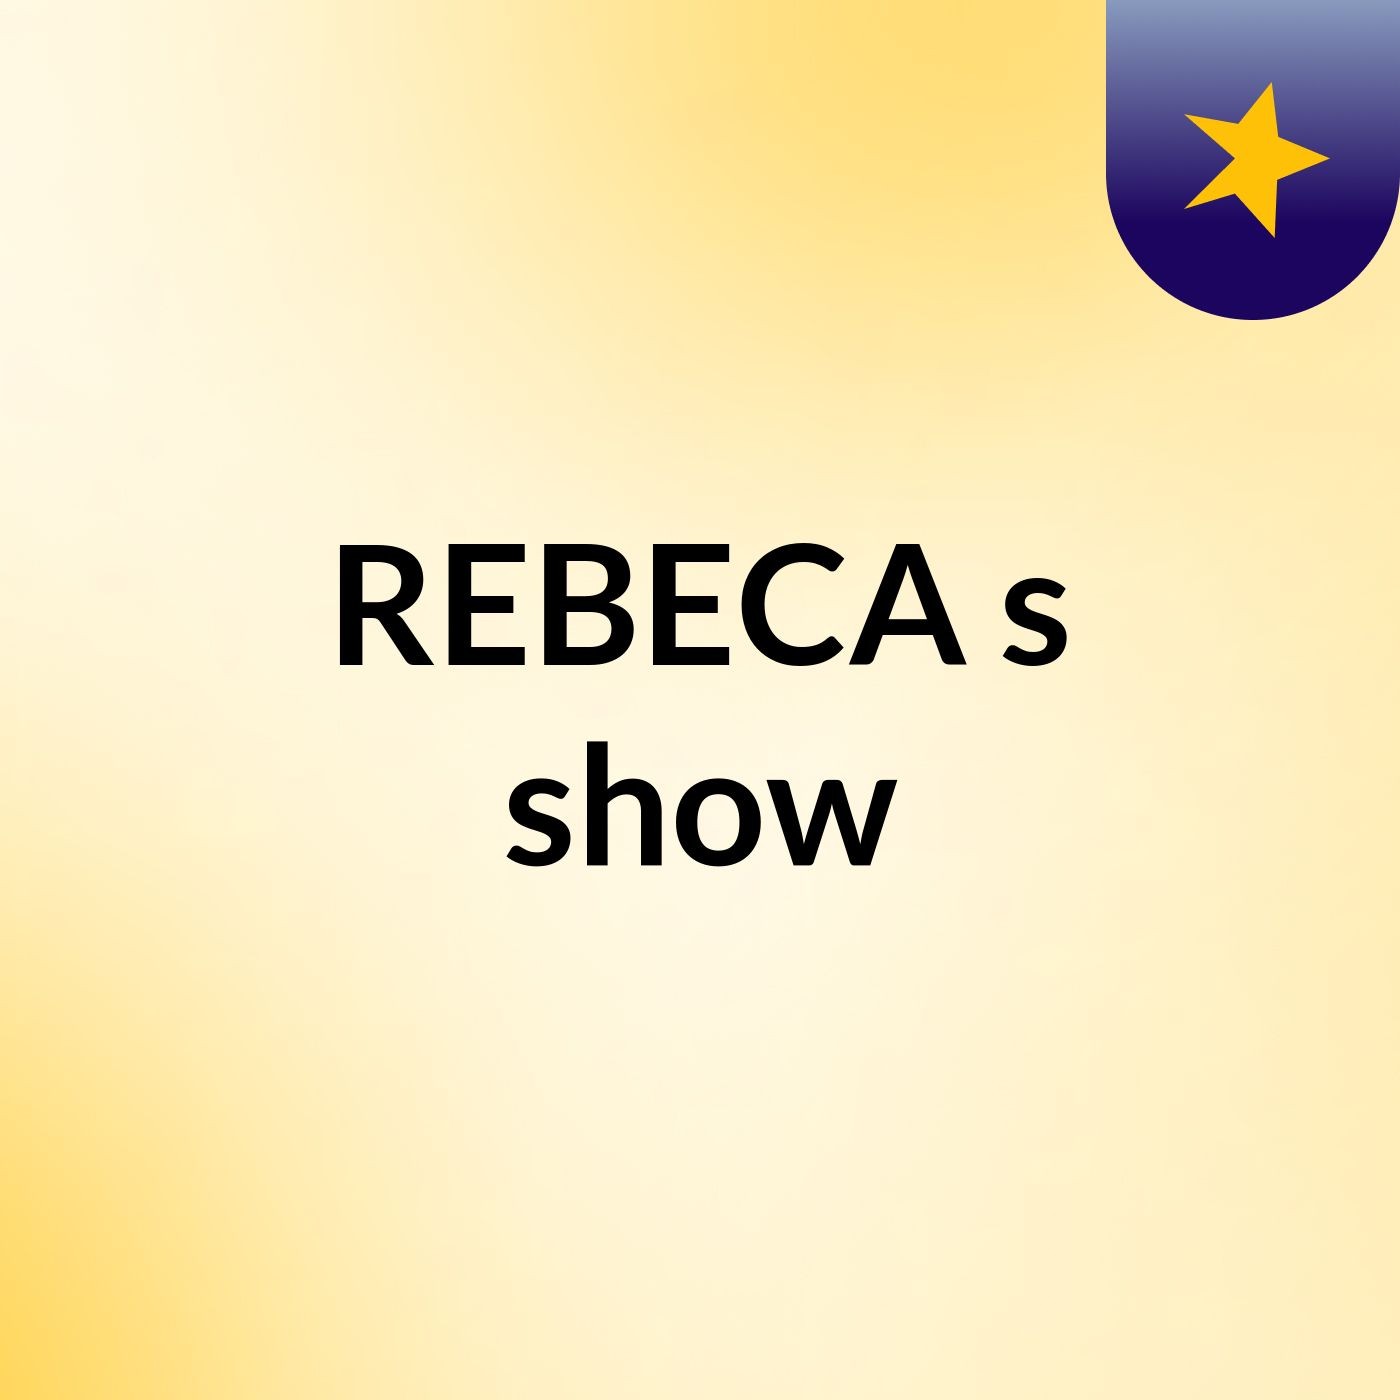 REBECA's show